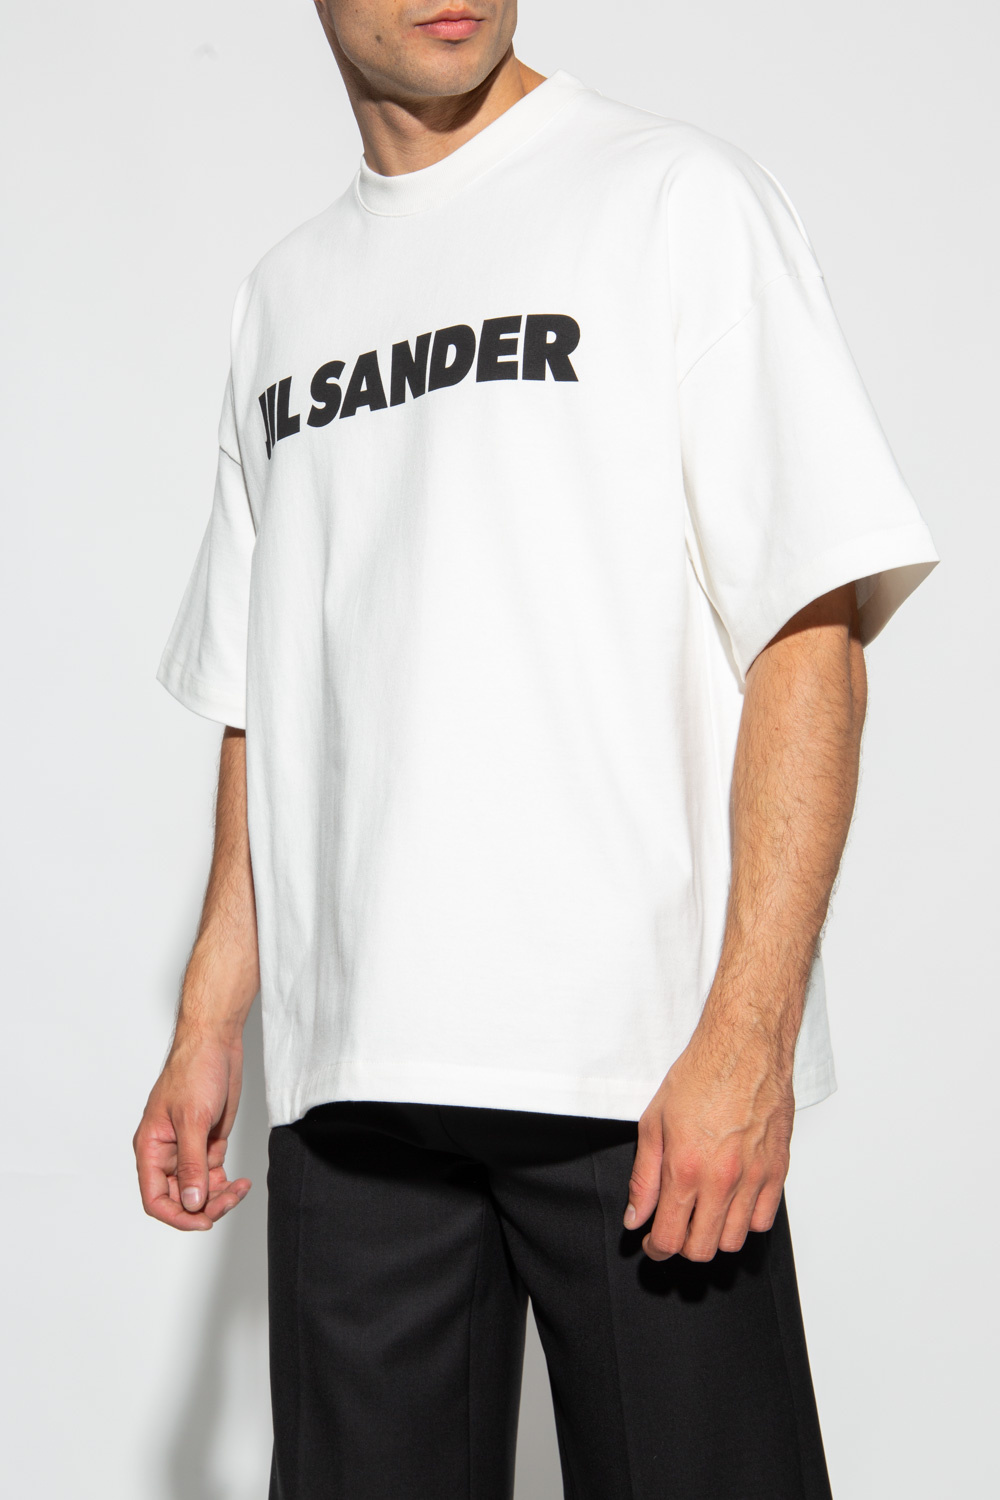 Men's Clothing - womens jil sander tops - JIL SANDER Logo T 